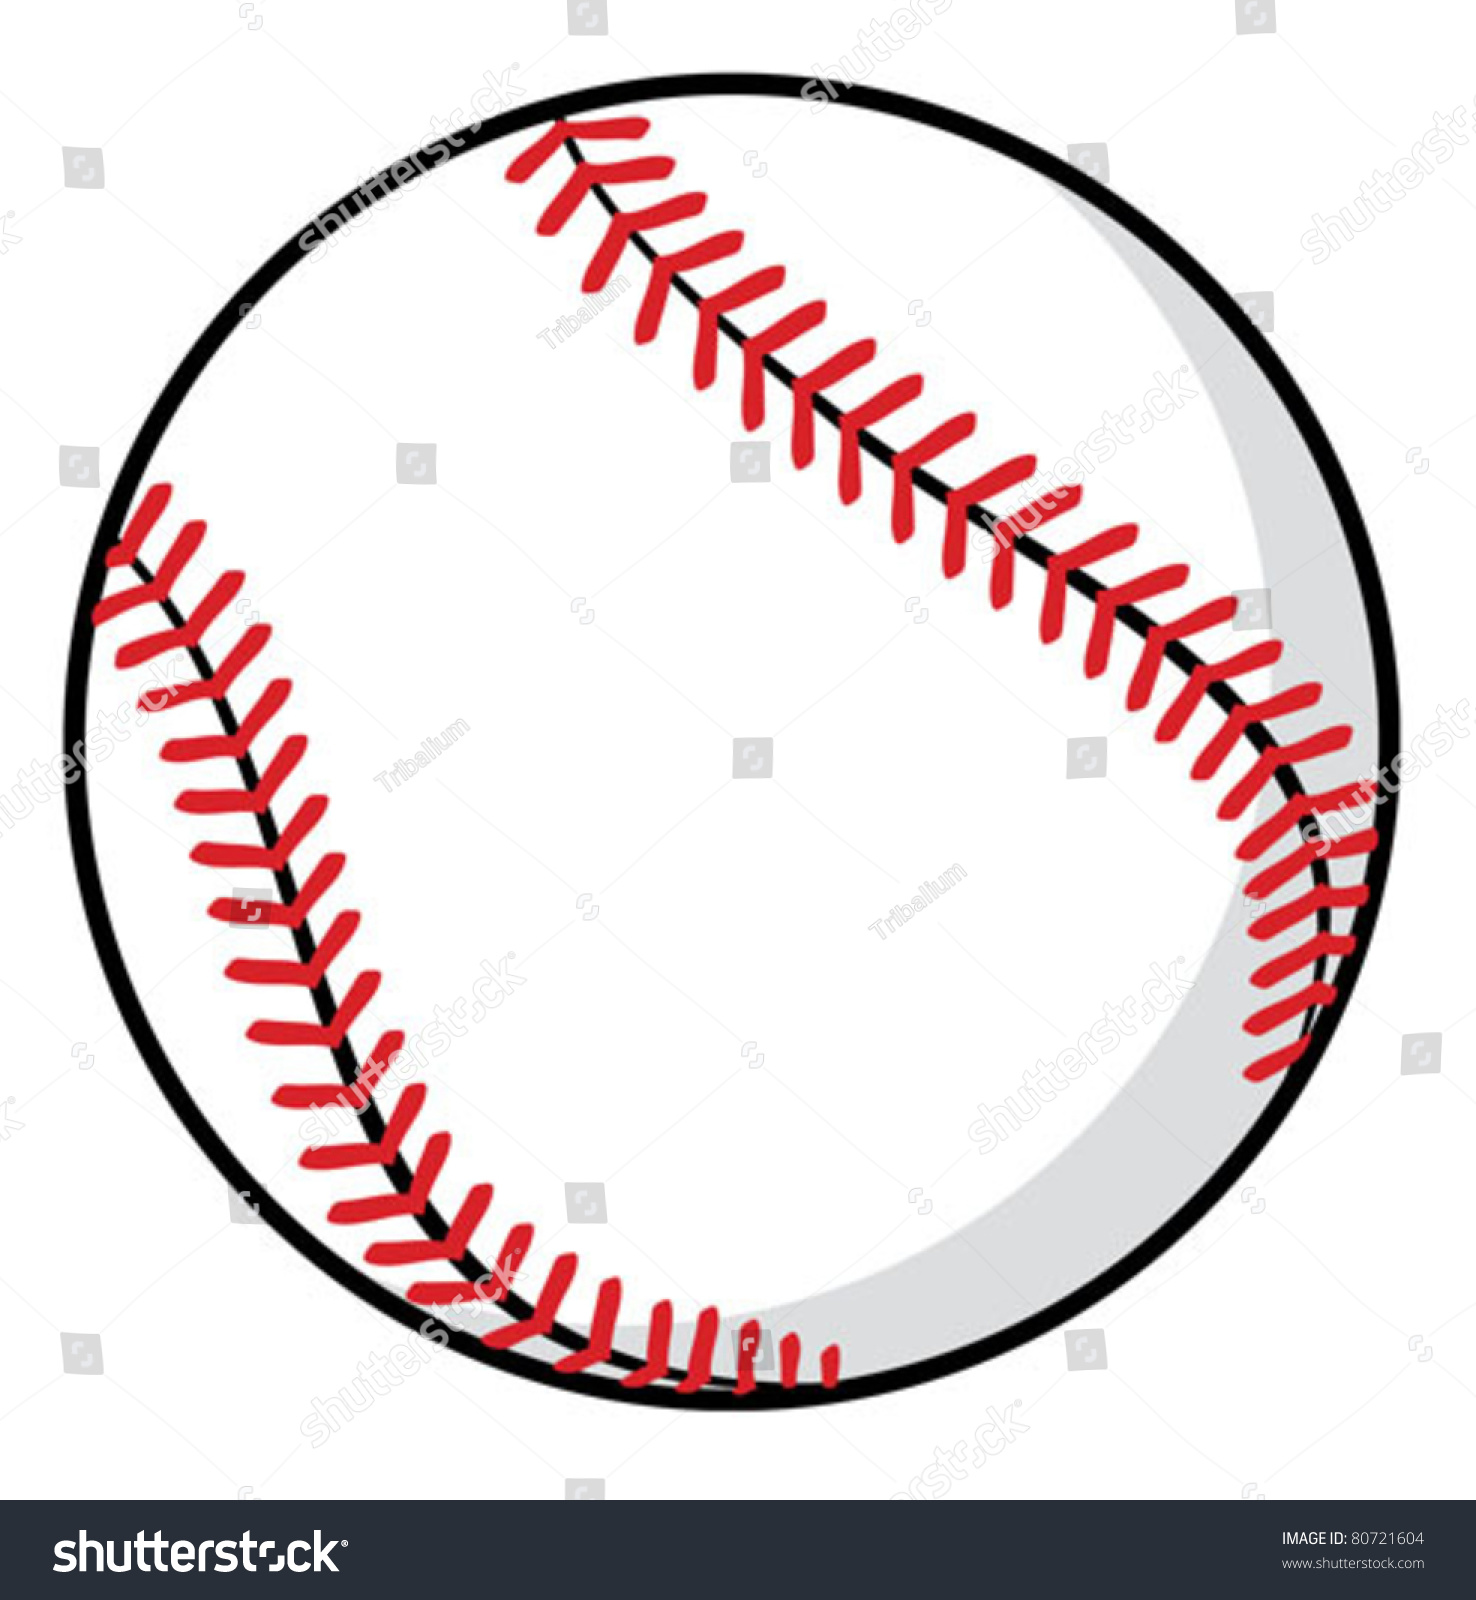 baseball clipart images free vector - photo #42